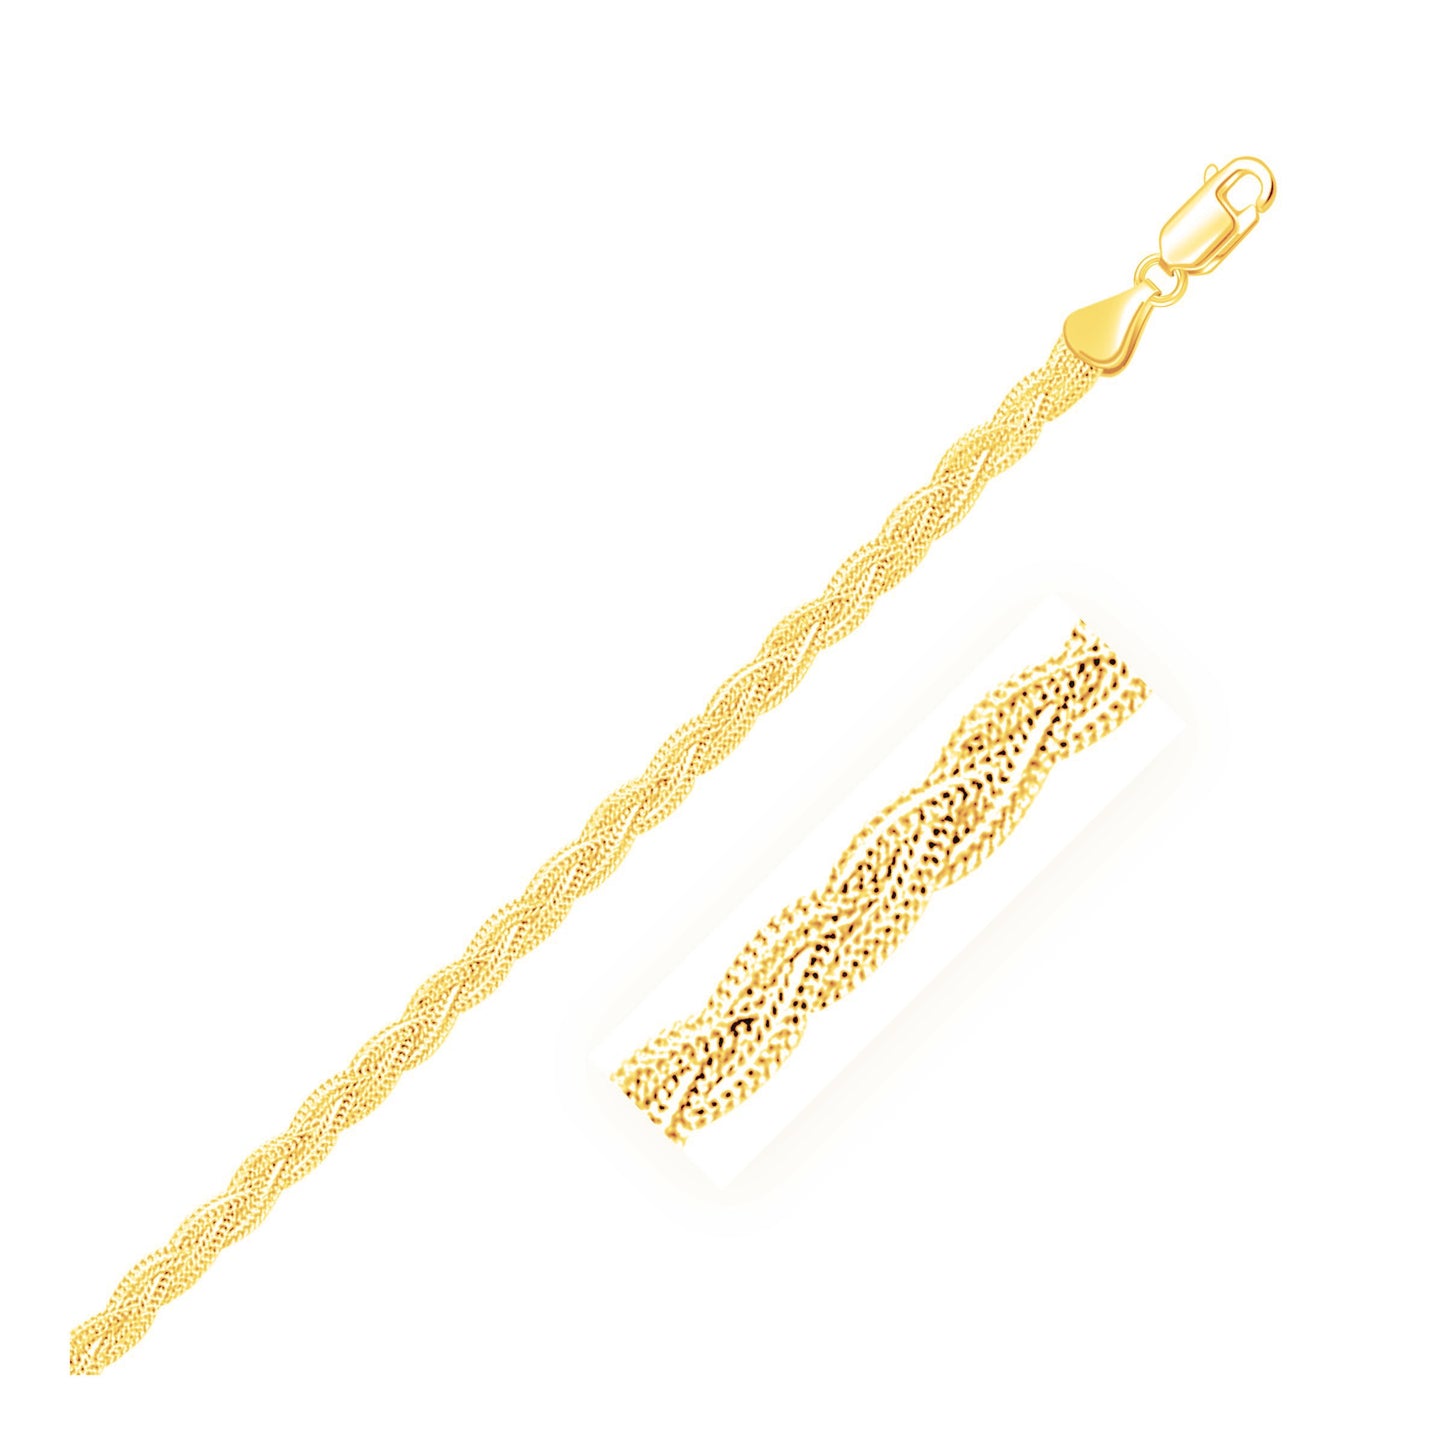 3.5mm 14k Yellow Gold Braided Bracelet